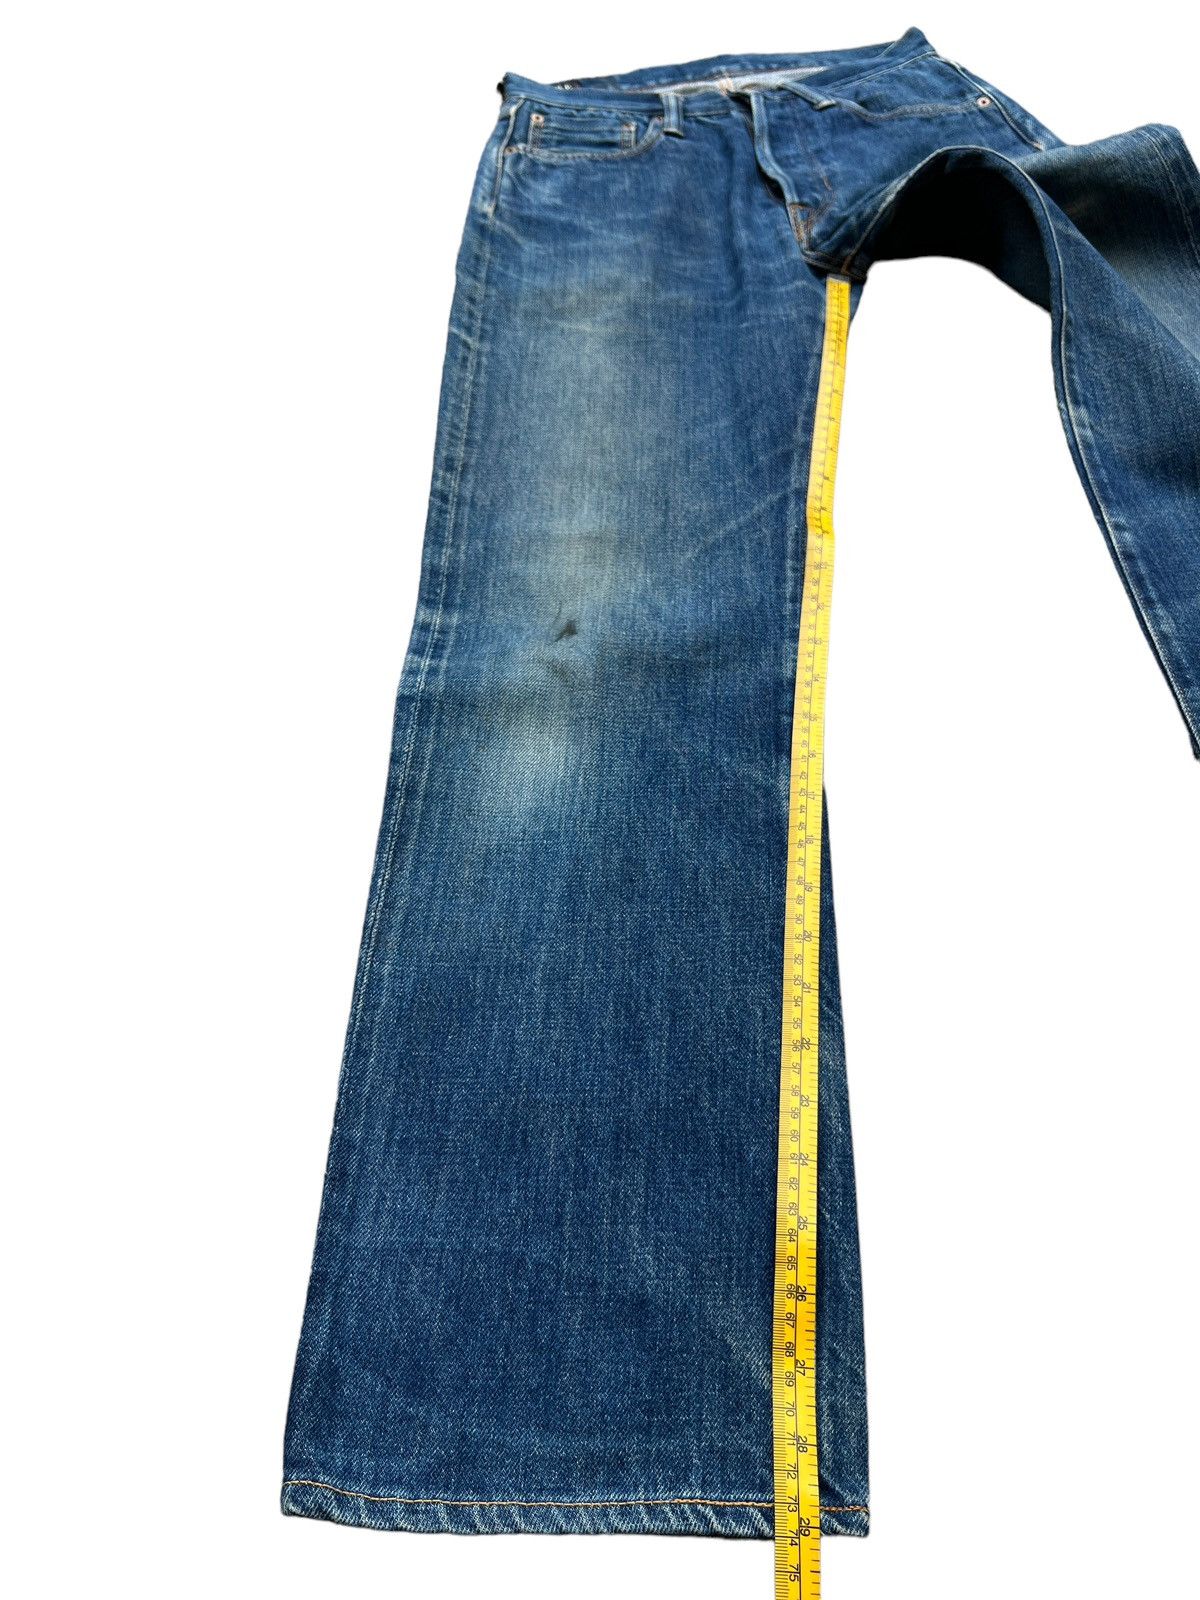 Vintage 45Rpm Selvedge Faded Distressed Denim Jeans 29x29 - 18